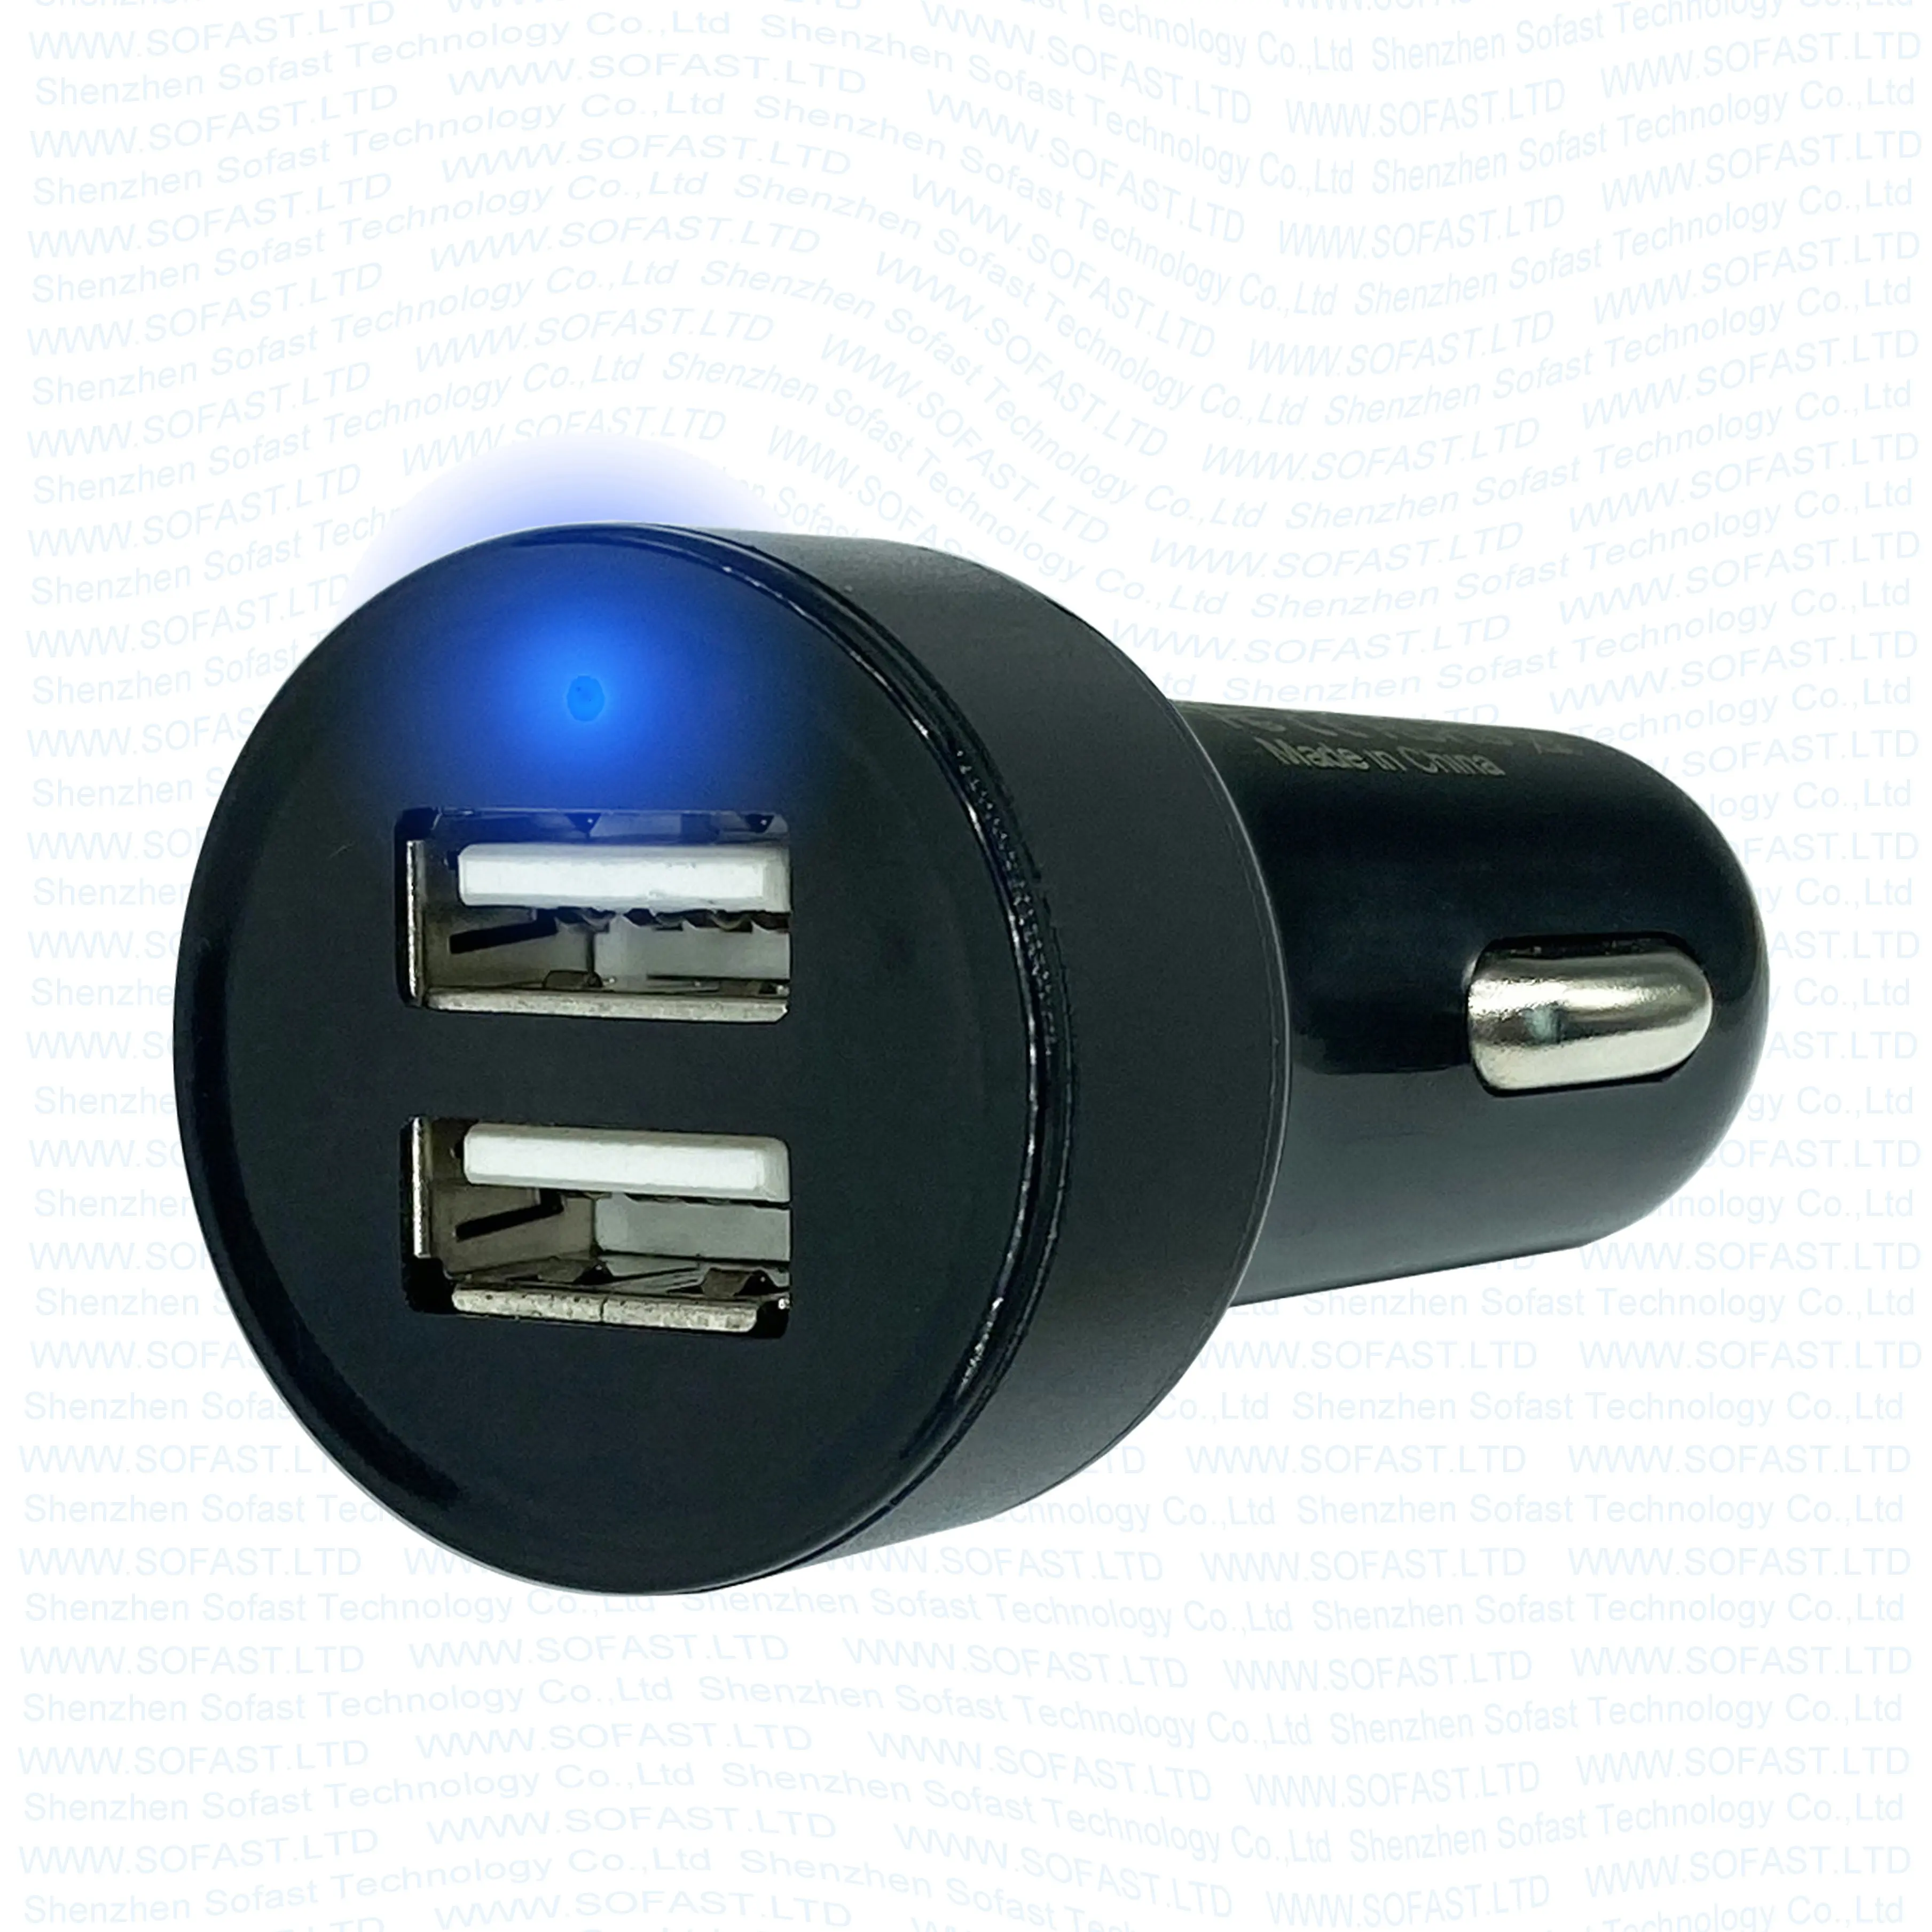 2 USB-Anschluss 3.1 ein intelligentes Auto ladegerät für Handy-Auto lade zubehör Dual-USB-Auto ladegerät Adapter